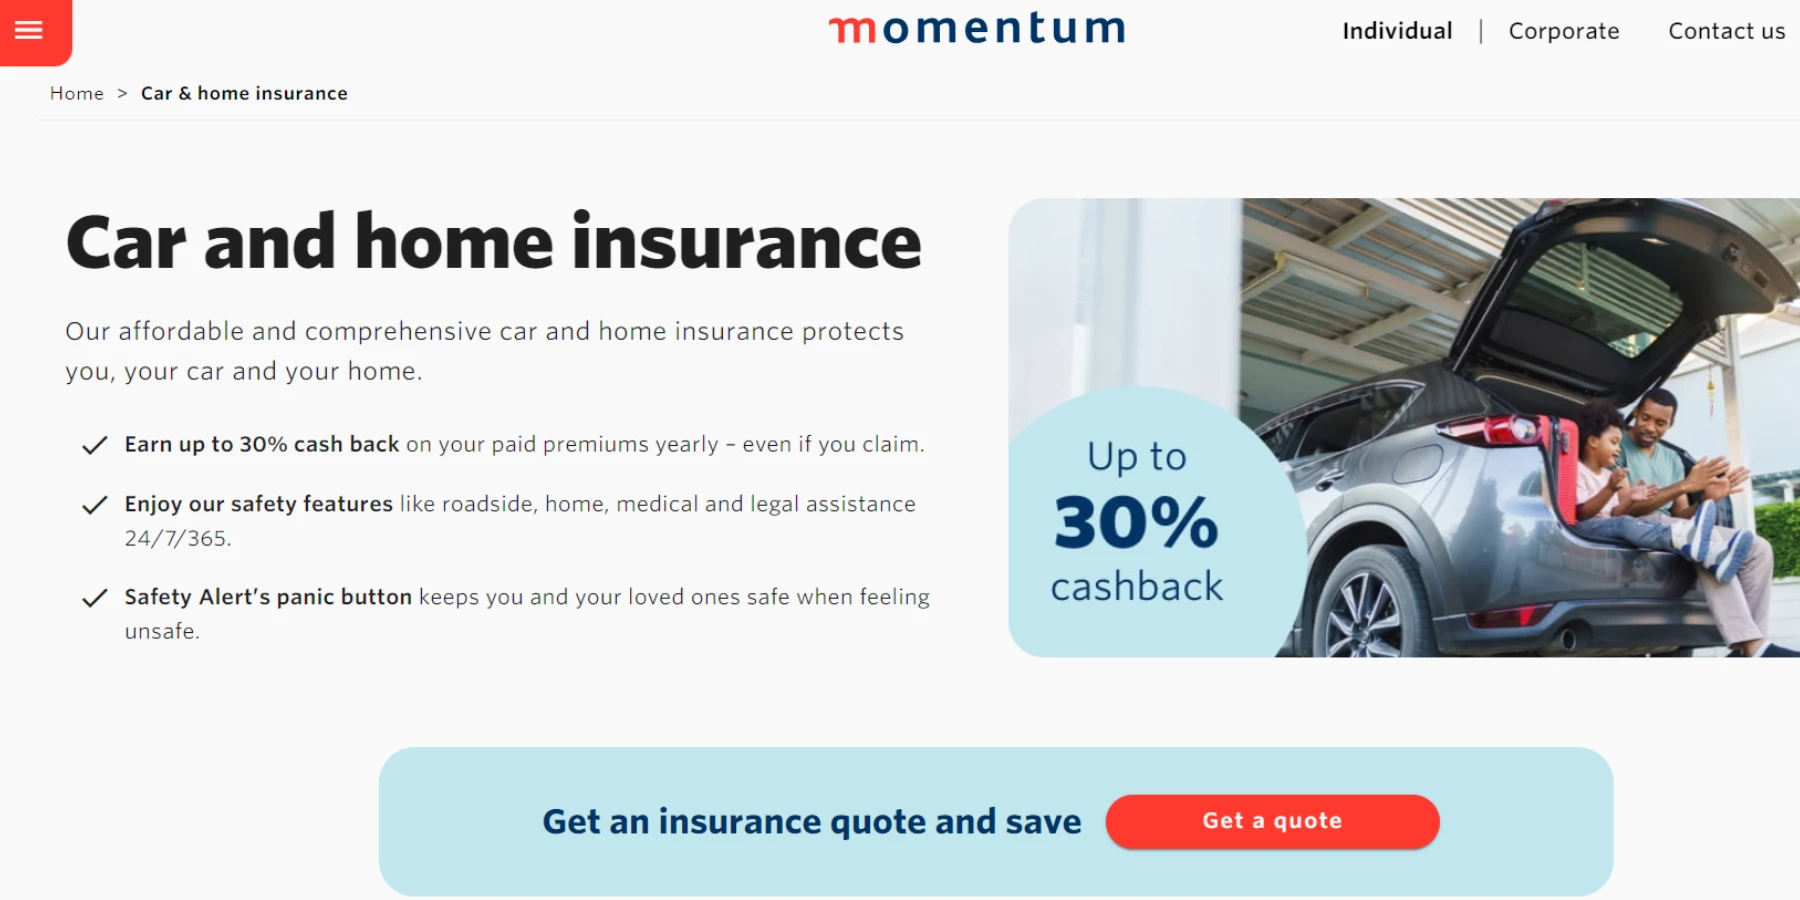 Momentum Top Home Insurance Companies